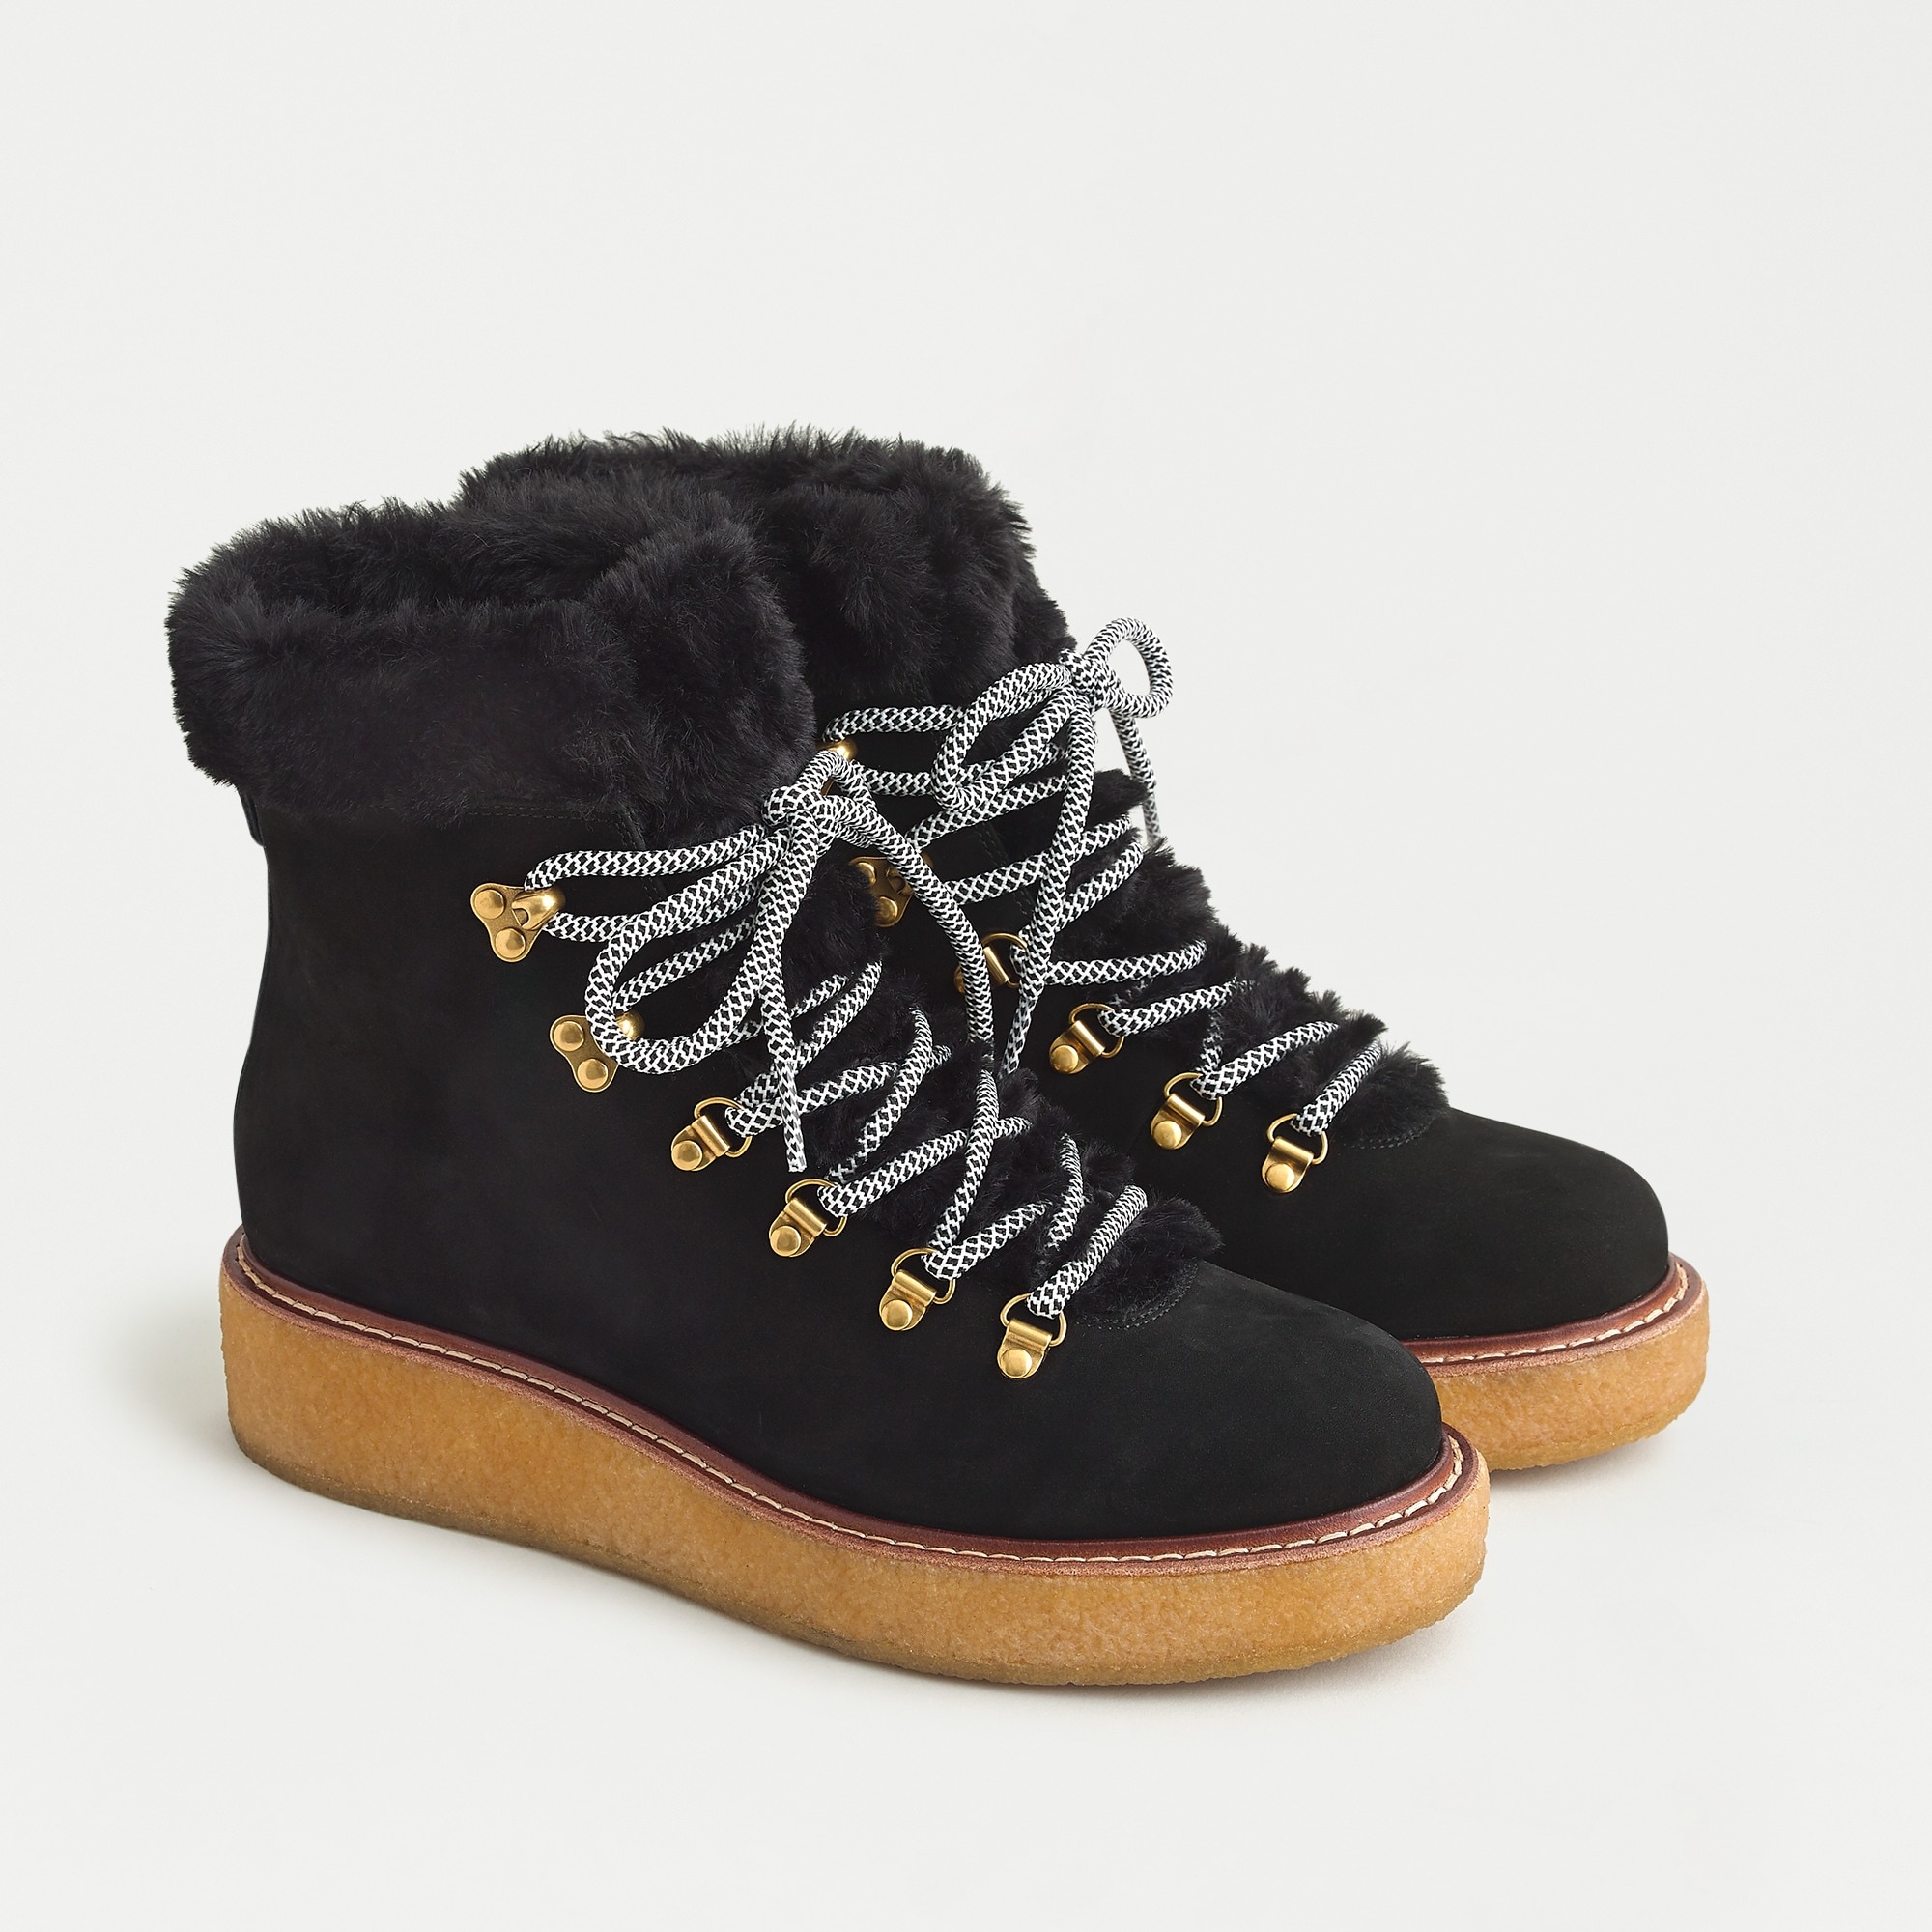 jcrew winter boots